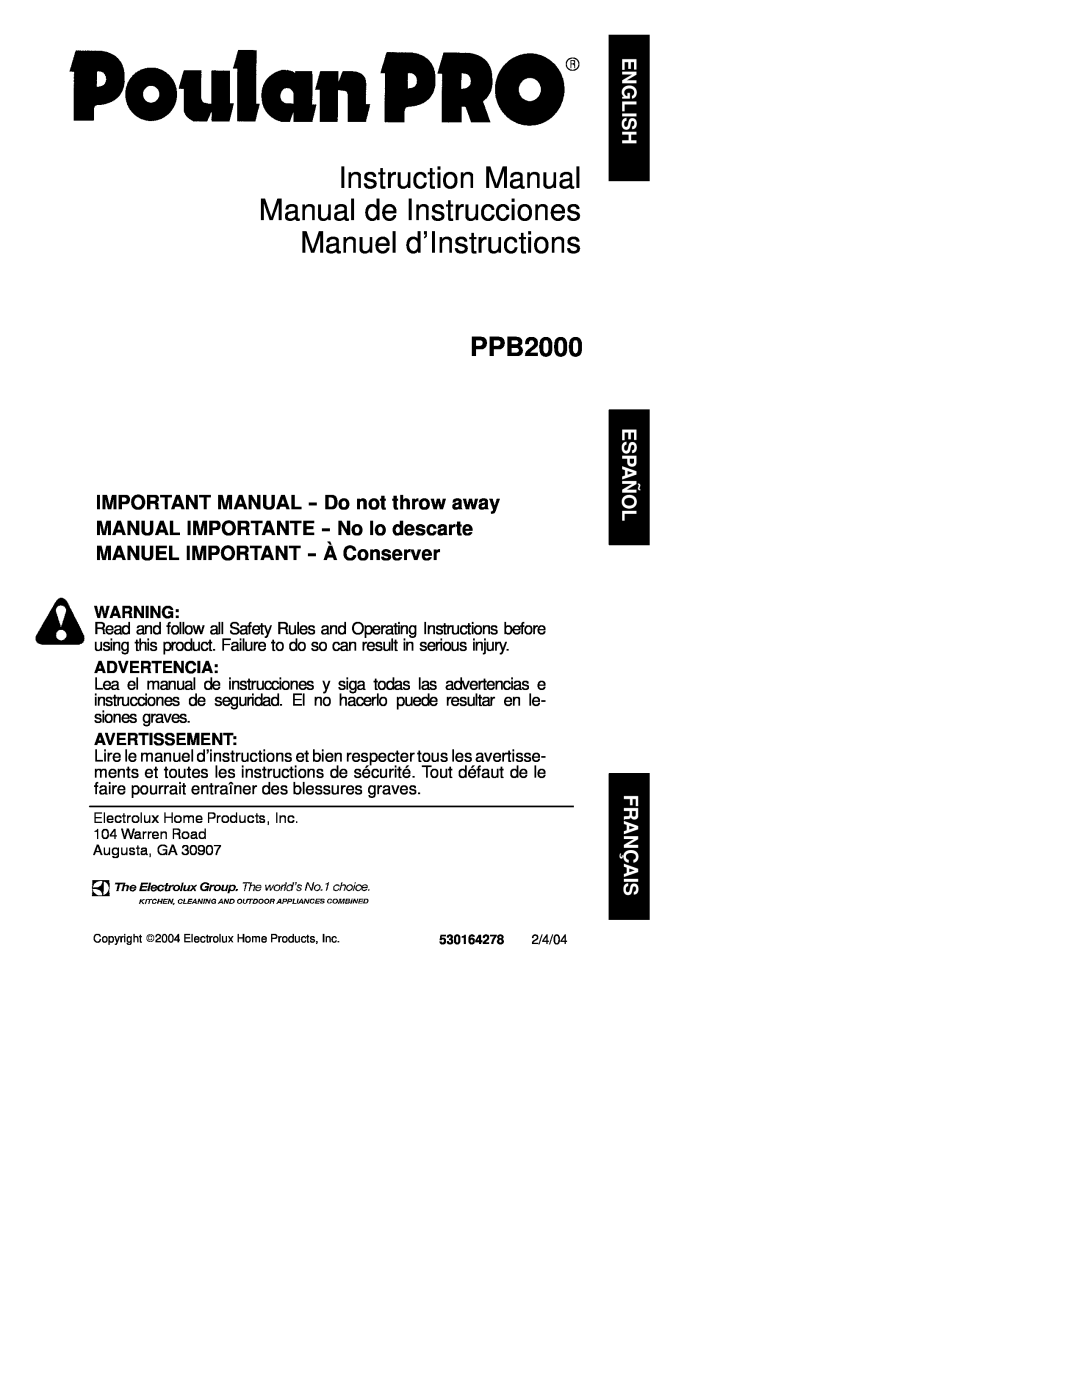 Poulan 530164278 instruction manual PPB2000, Advertencia, Avertissement 